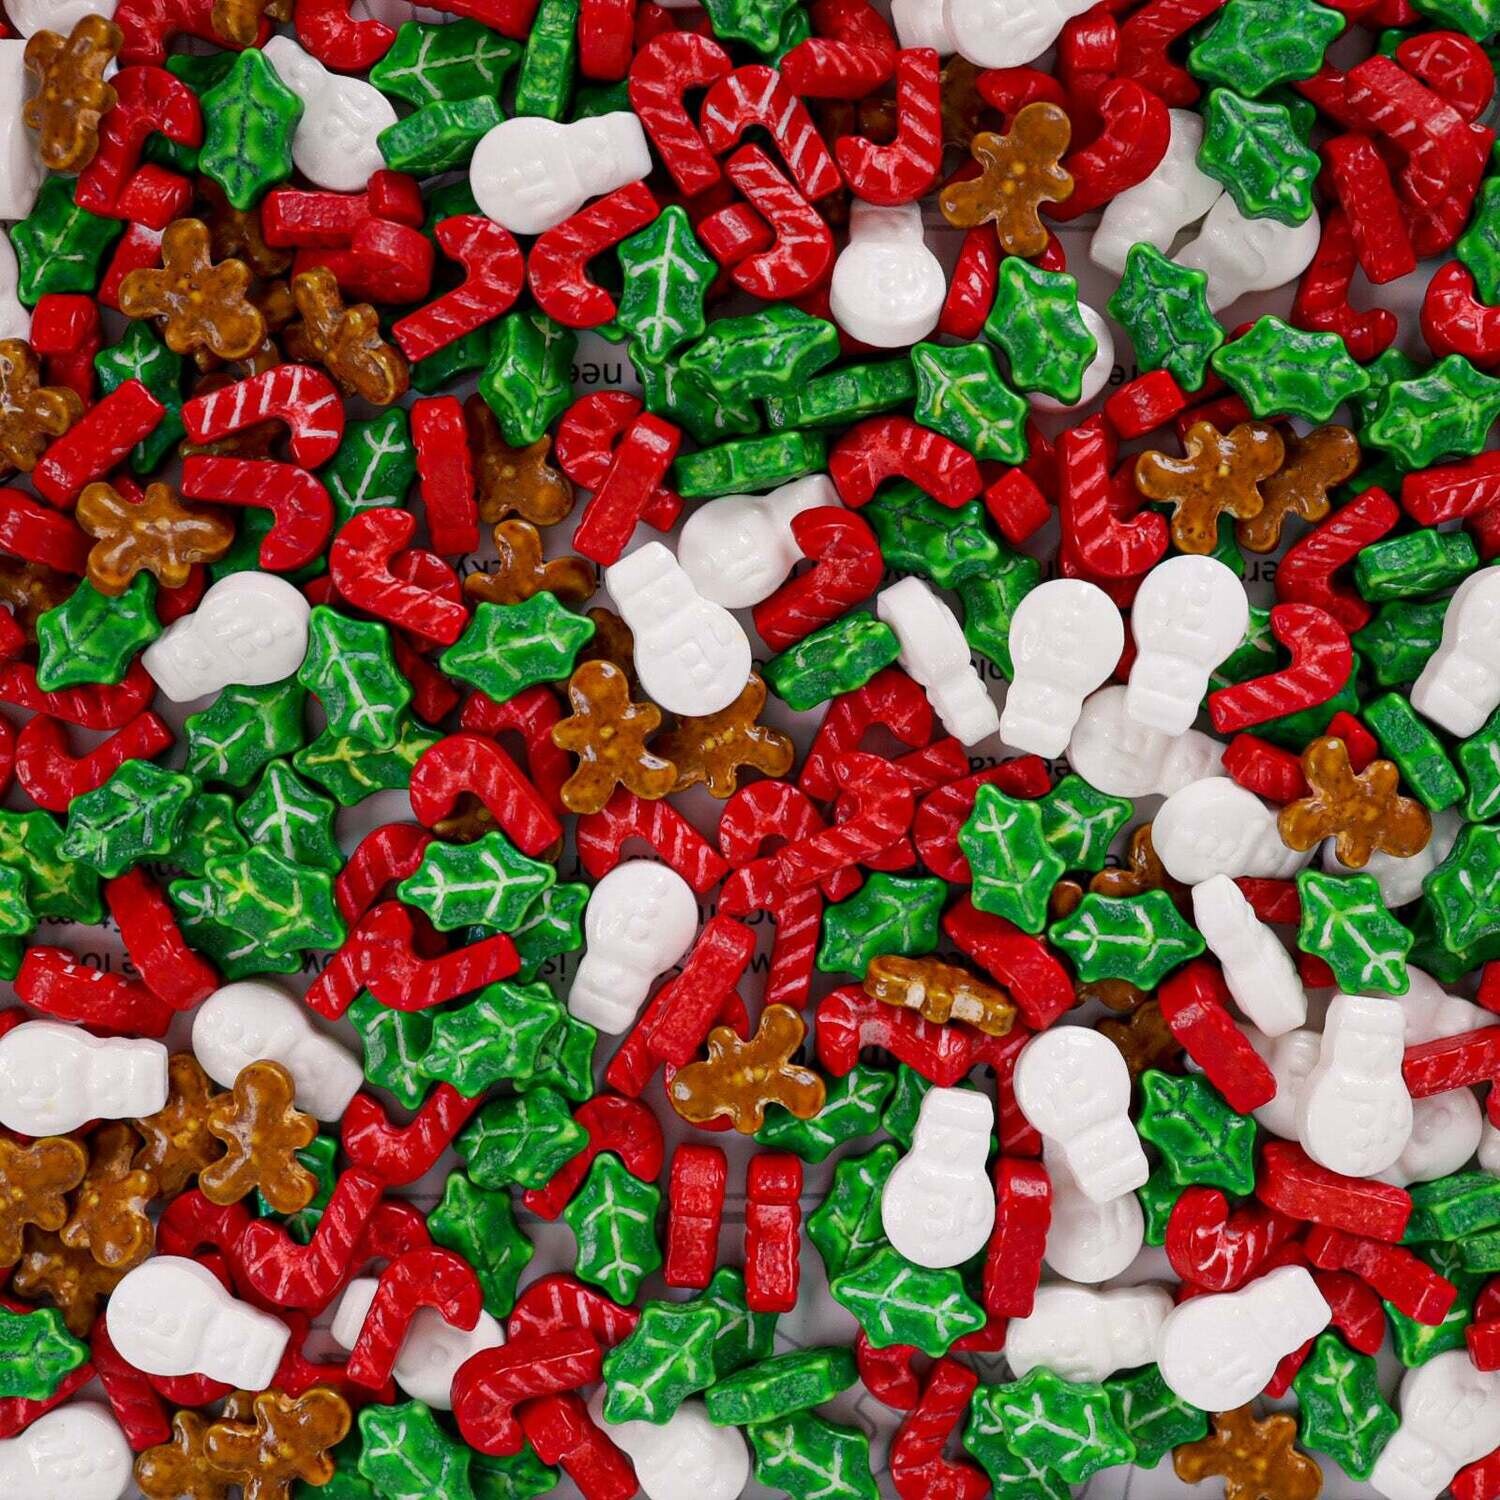 Halo Sprinkles MIX -FESTIVE FUN 125γρ  - Μείγμα Ζαχαρωτών Χριστουγεννιάτικο με Φύλλα Γκι, Γλειφιτζούρια, Μπισκοτανθρωπάκια και Χιονανθρωπάκια